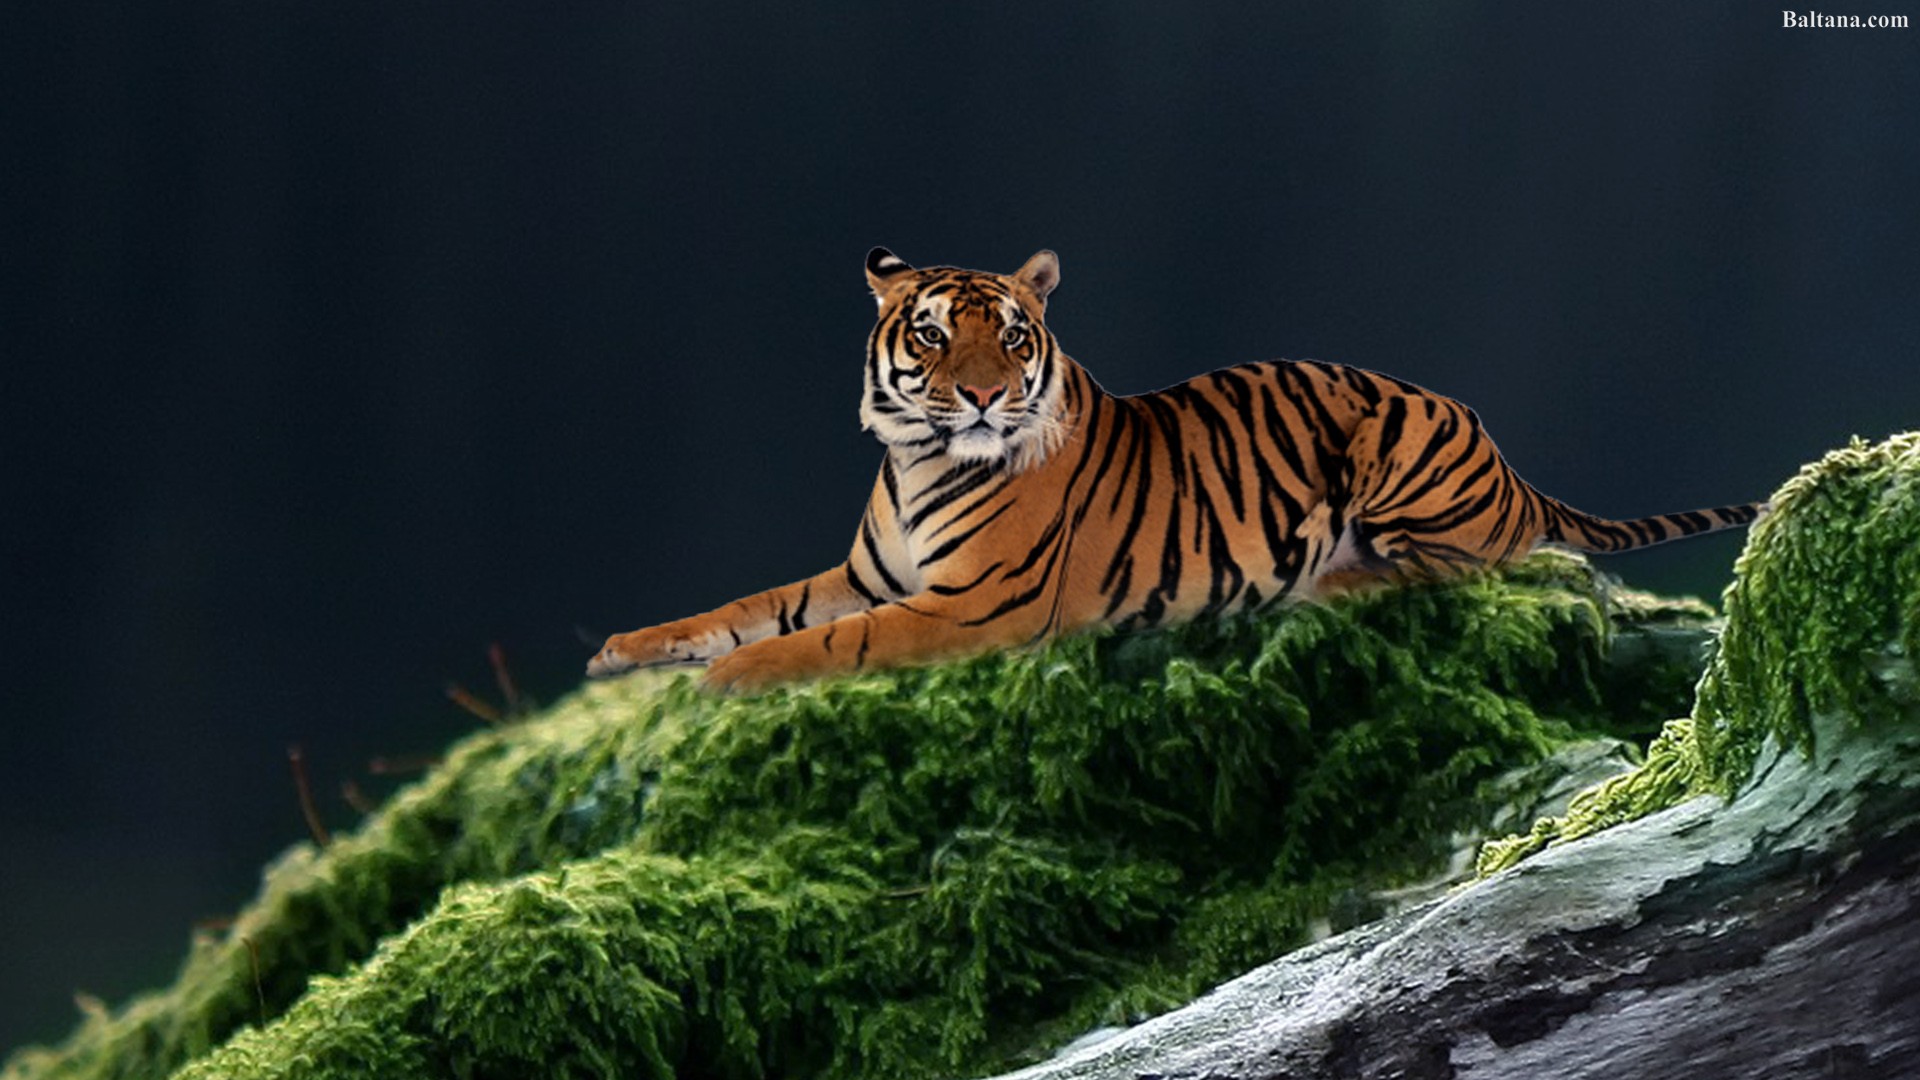 Tiger Desktop Wallpaper Baltana